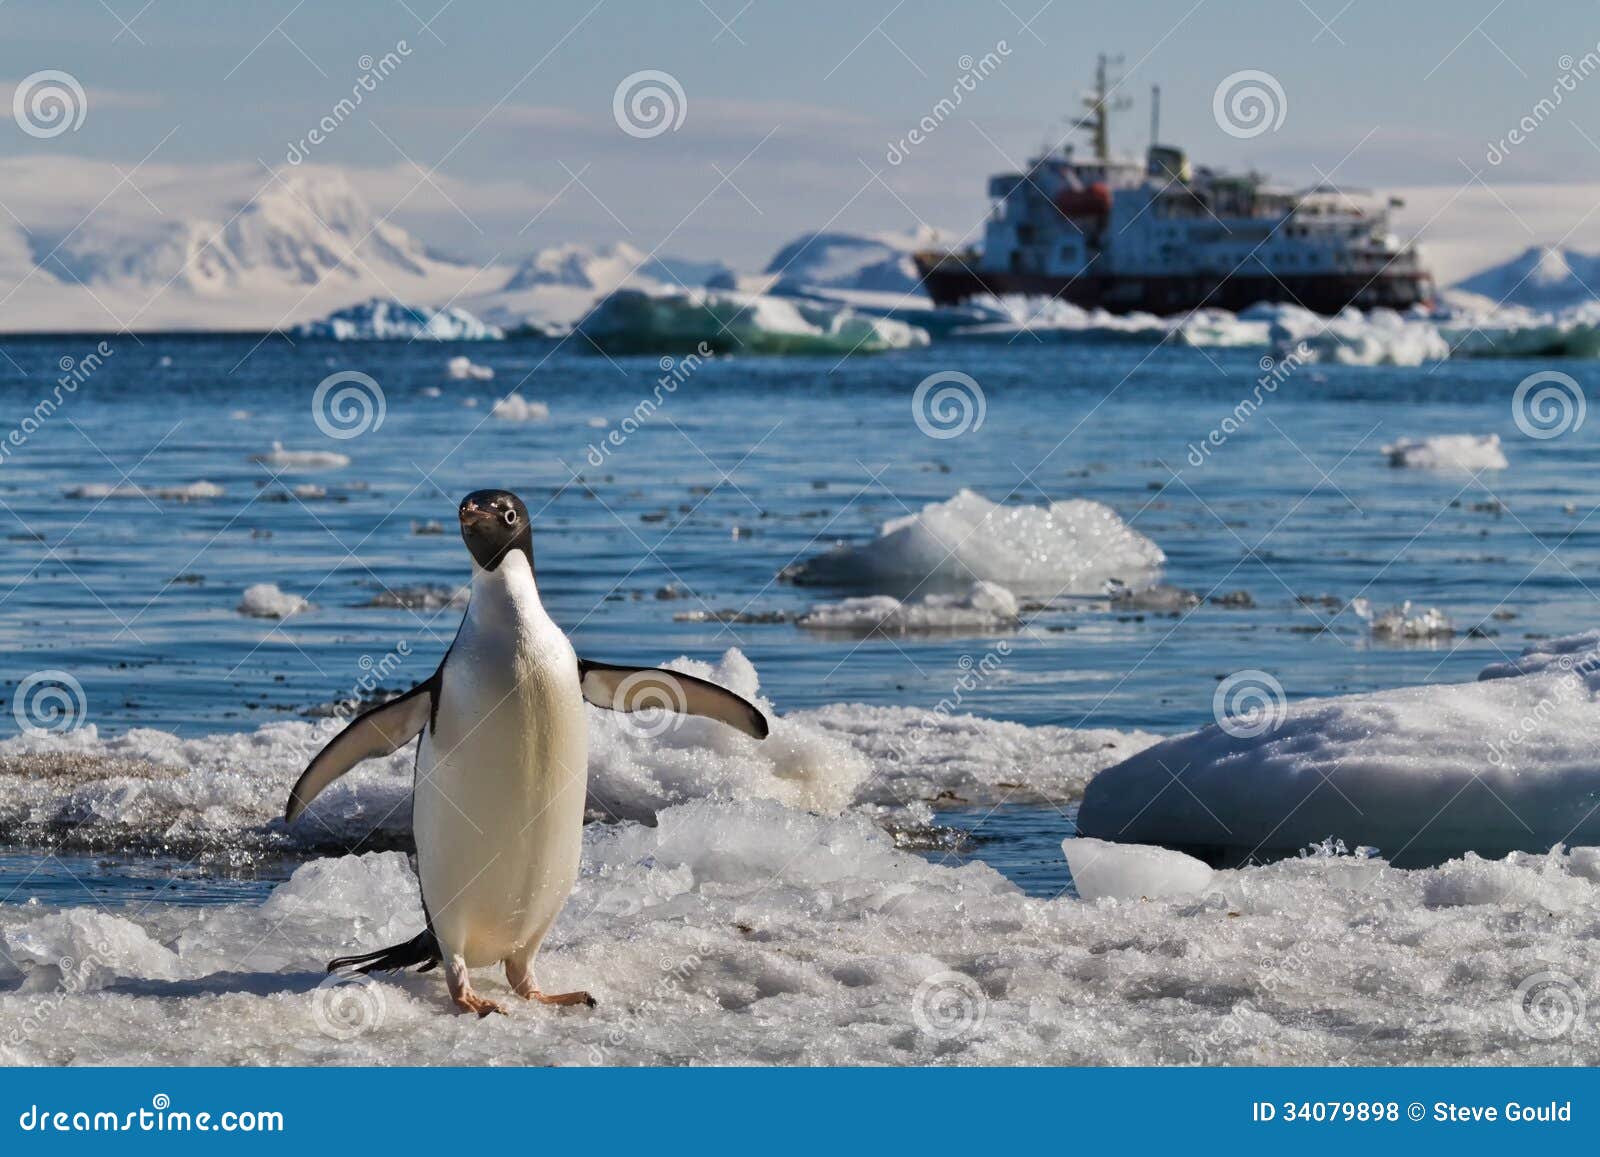 penguin icebergs cruise ship, antarctica